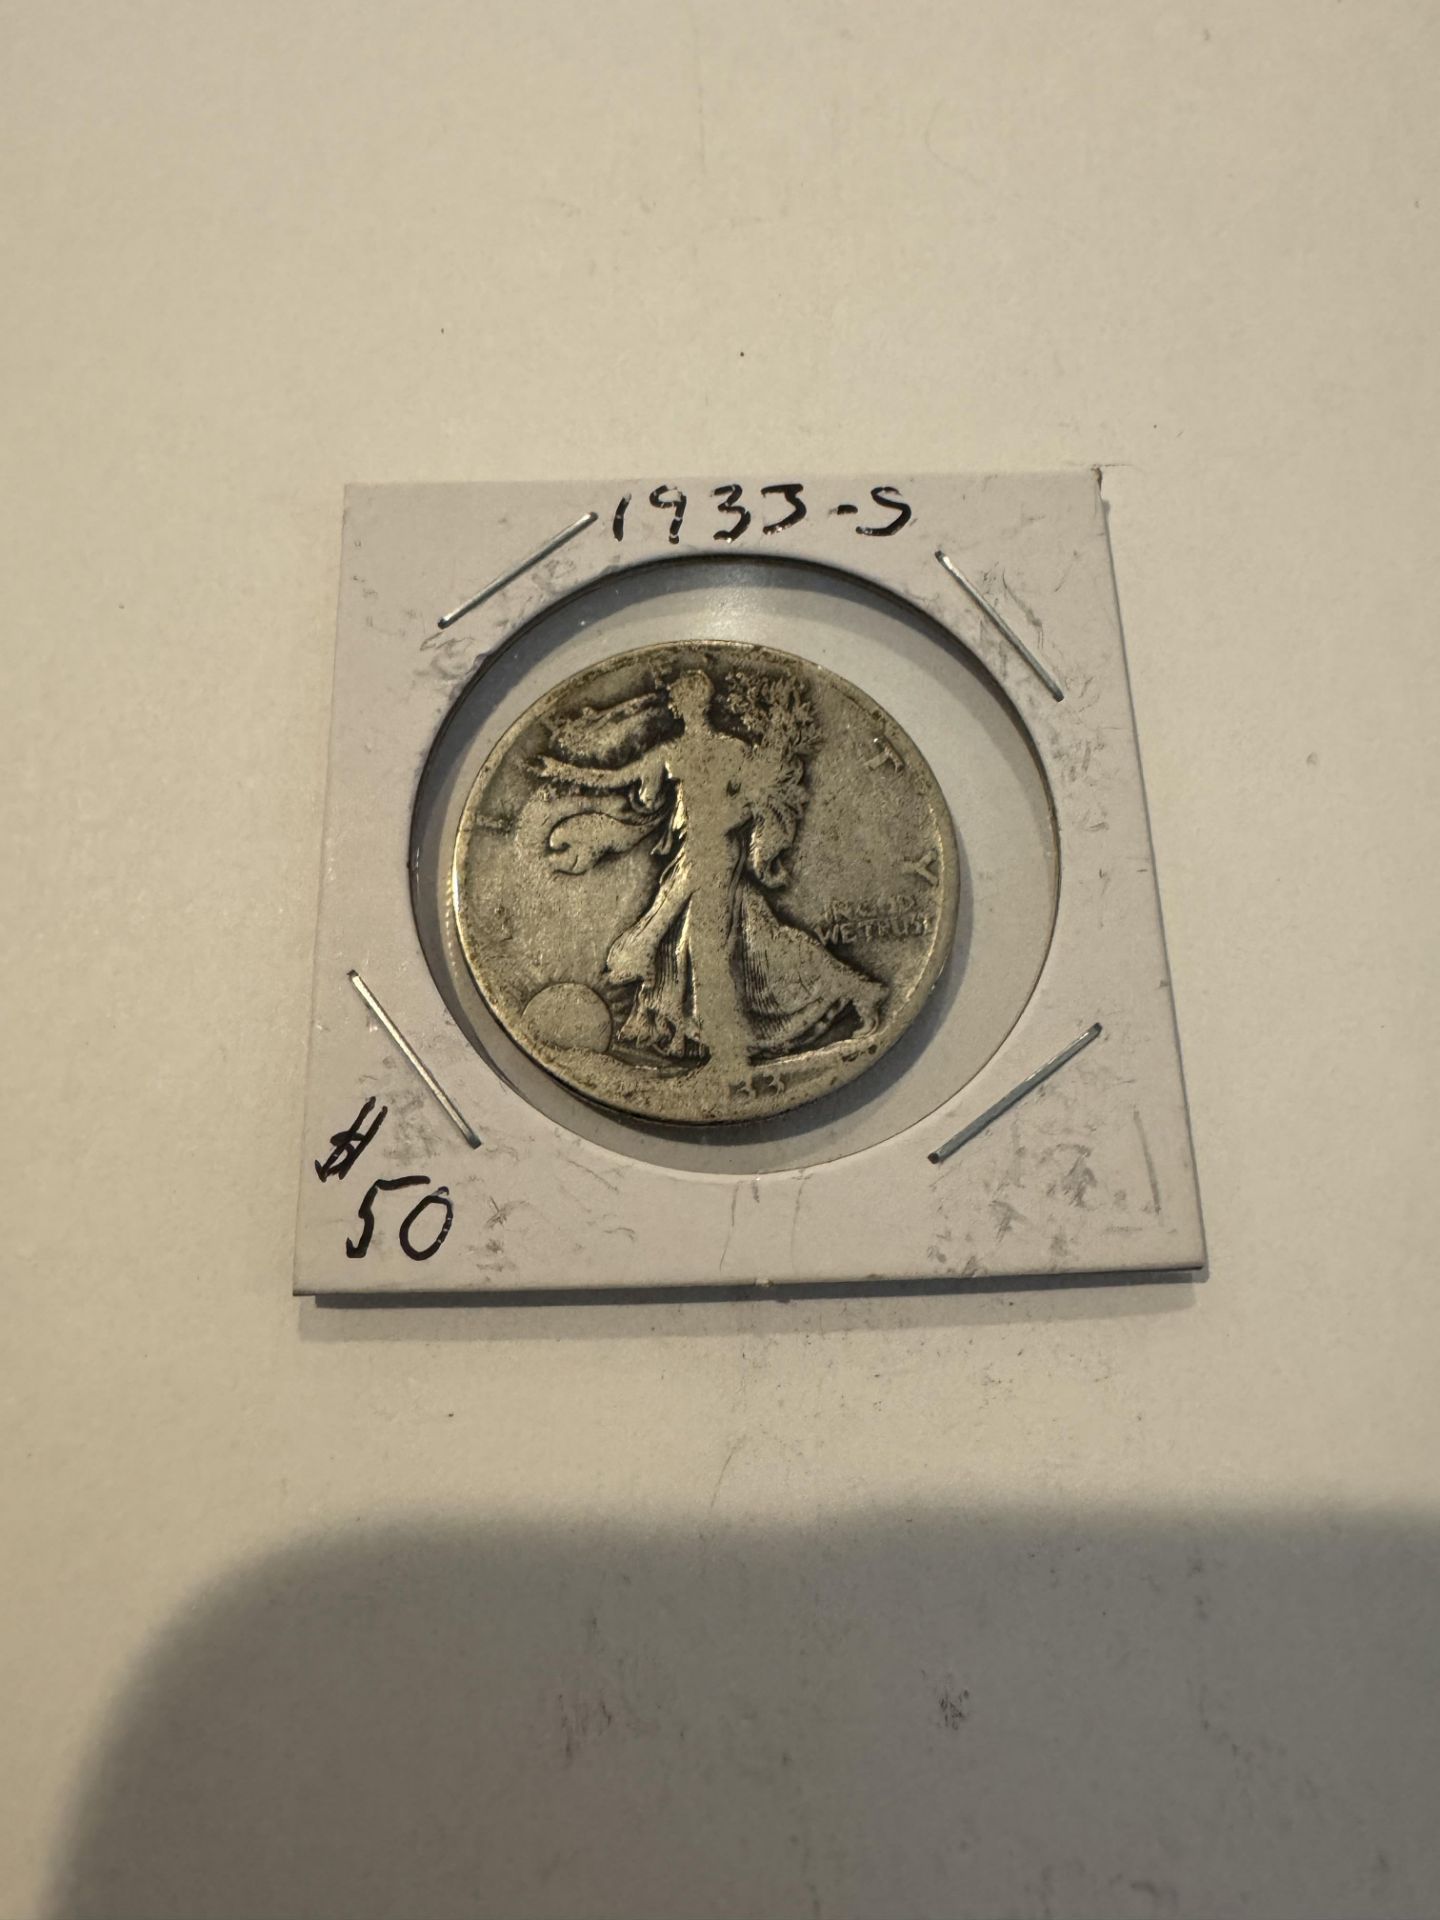 US Half-dollar silver coin 1933